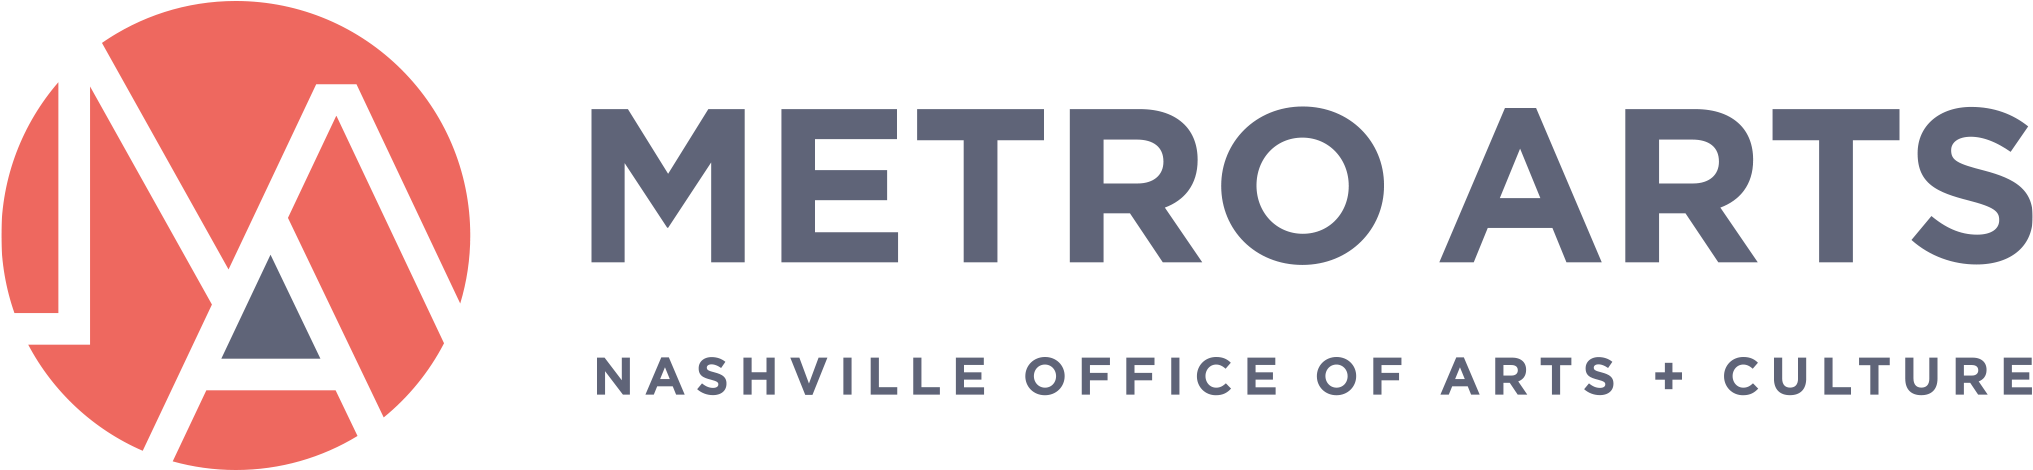 Metro Arts Metro - Metro Arts Nashville (2250x600)